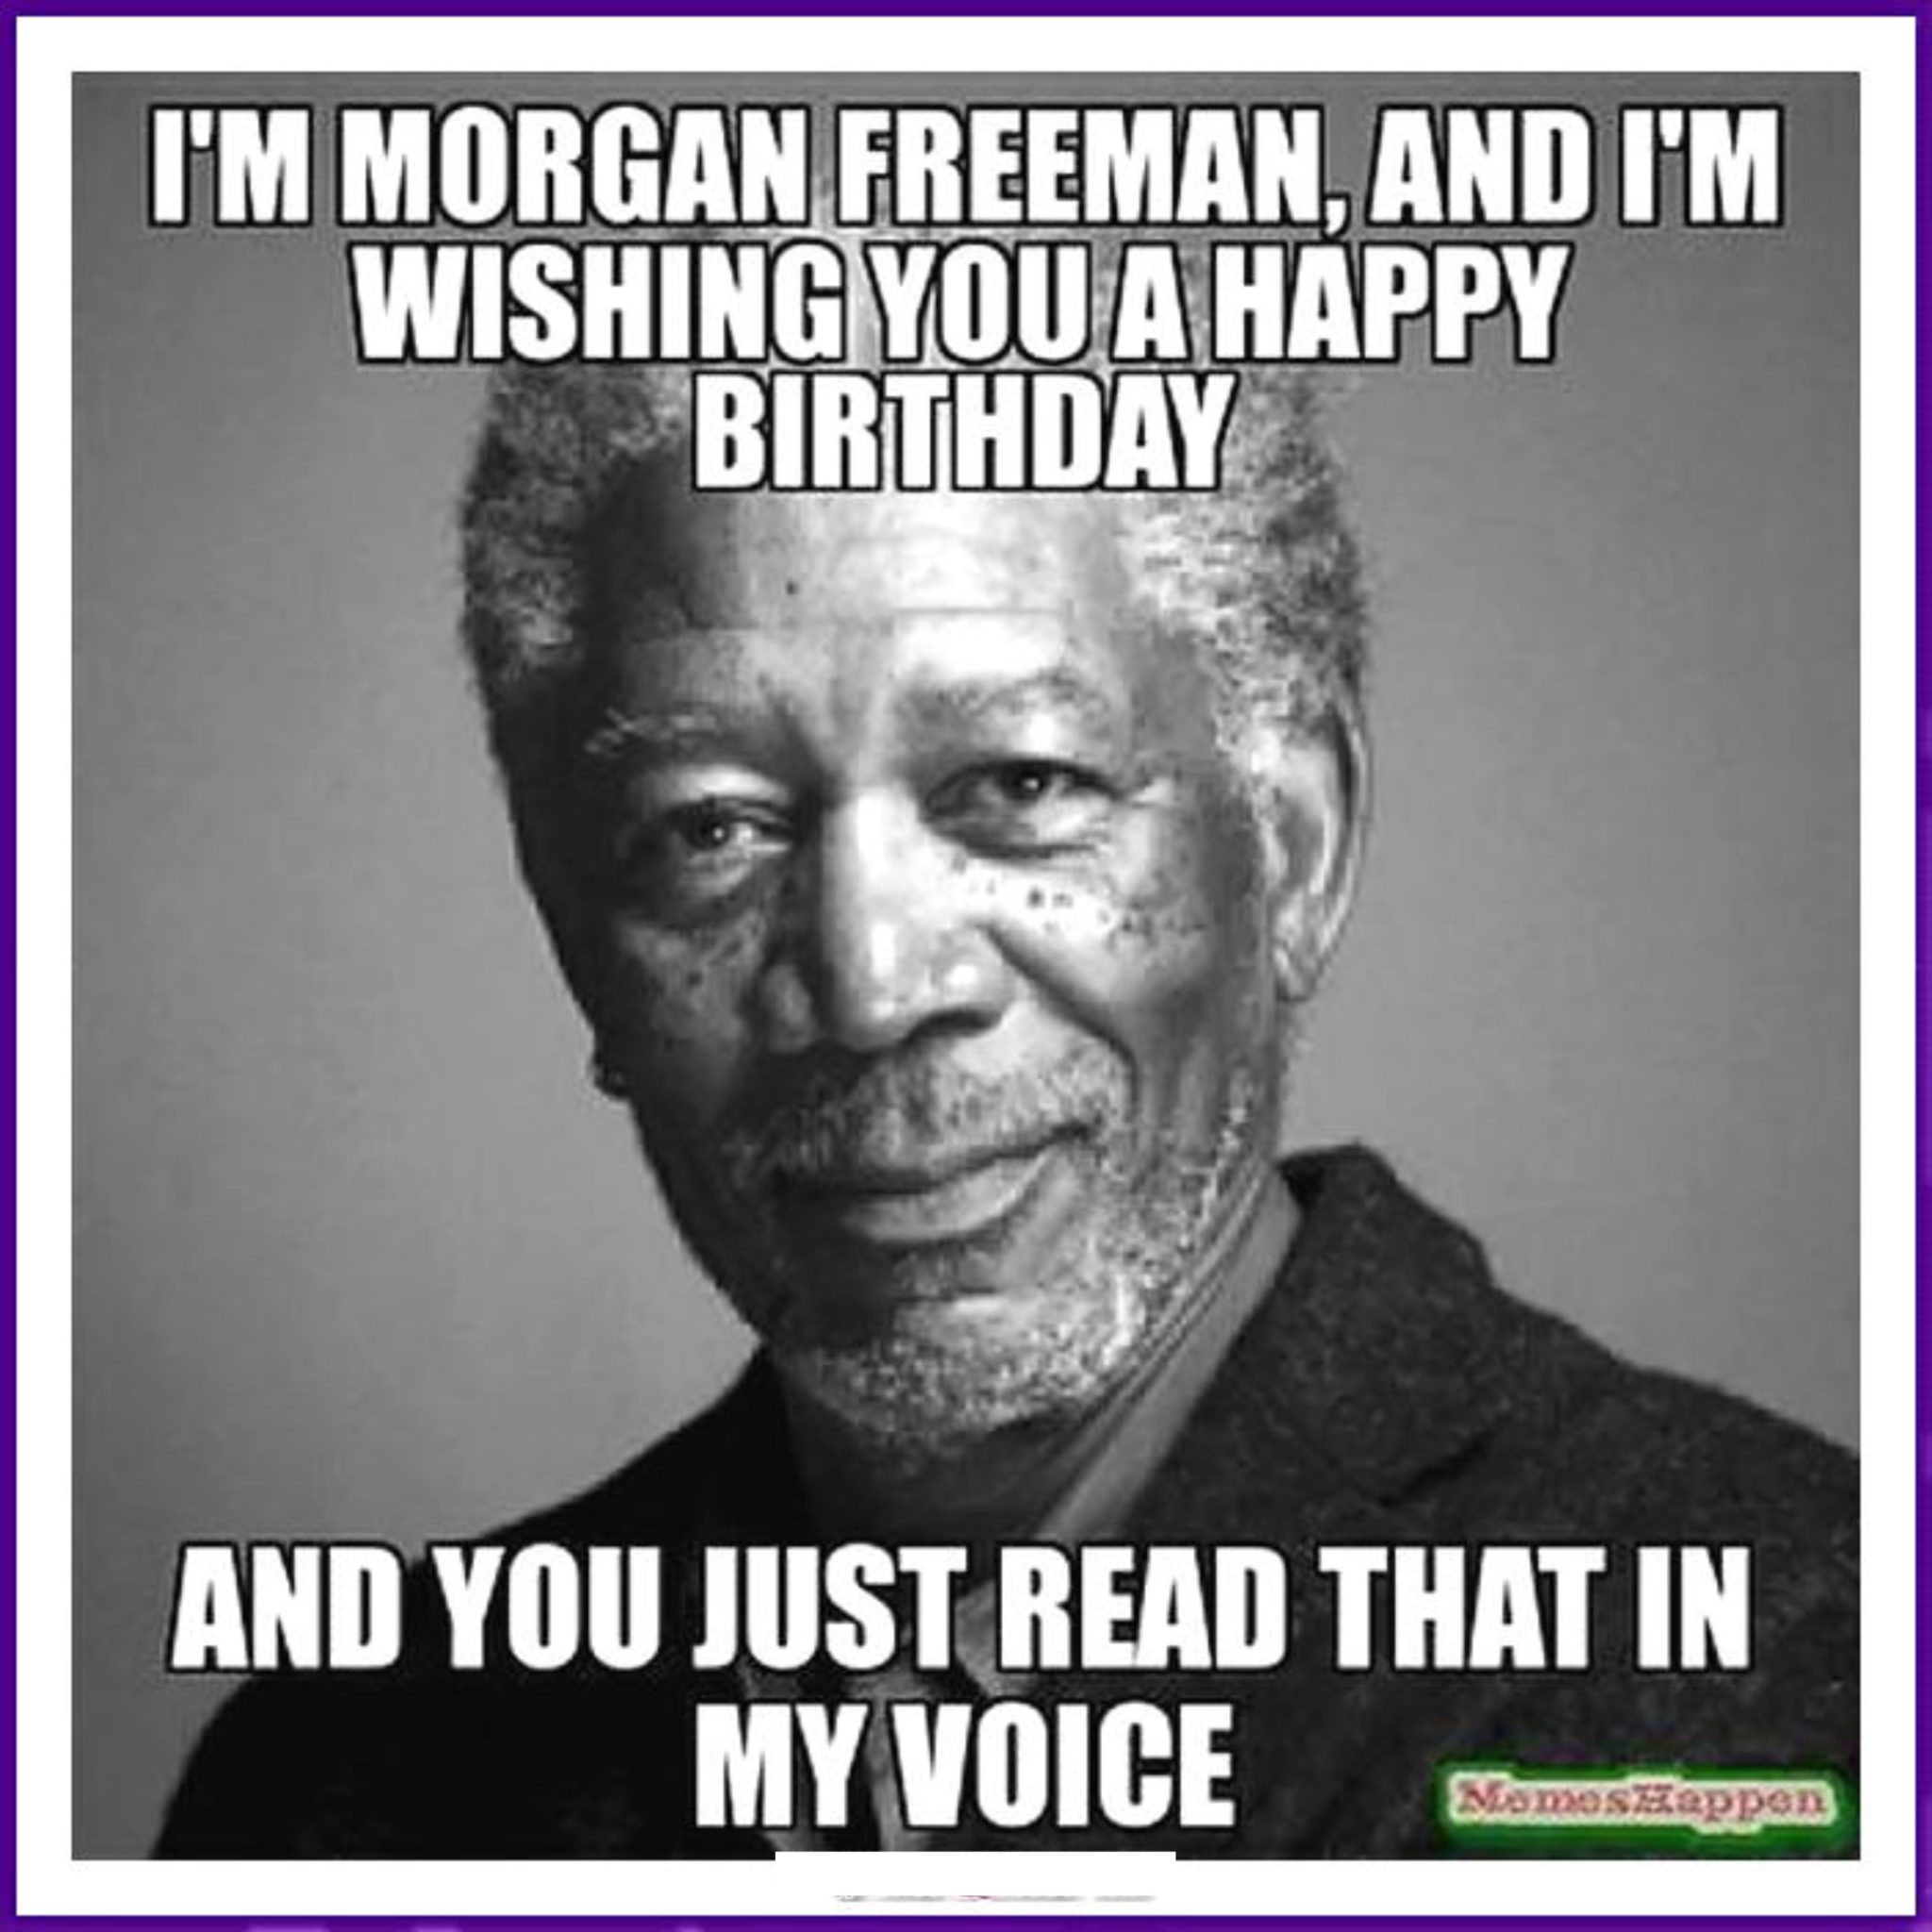 Funny & Famous People Birthday Memes - BirthdayWishings.com